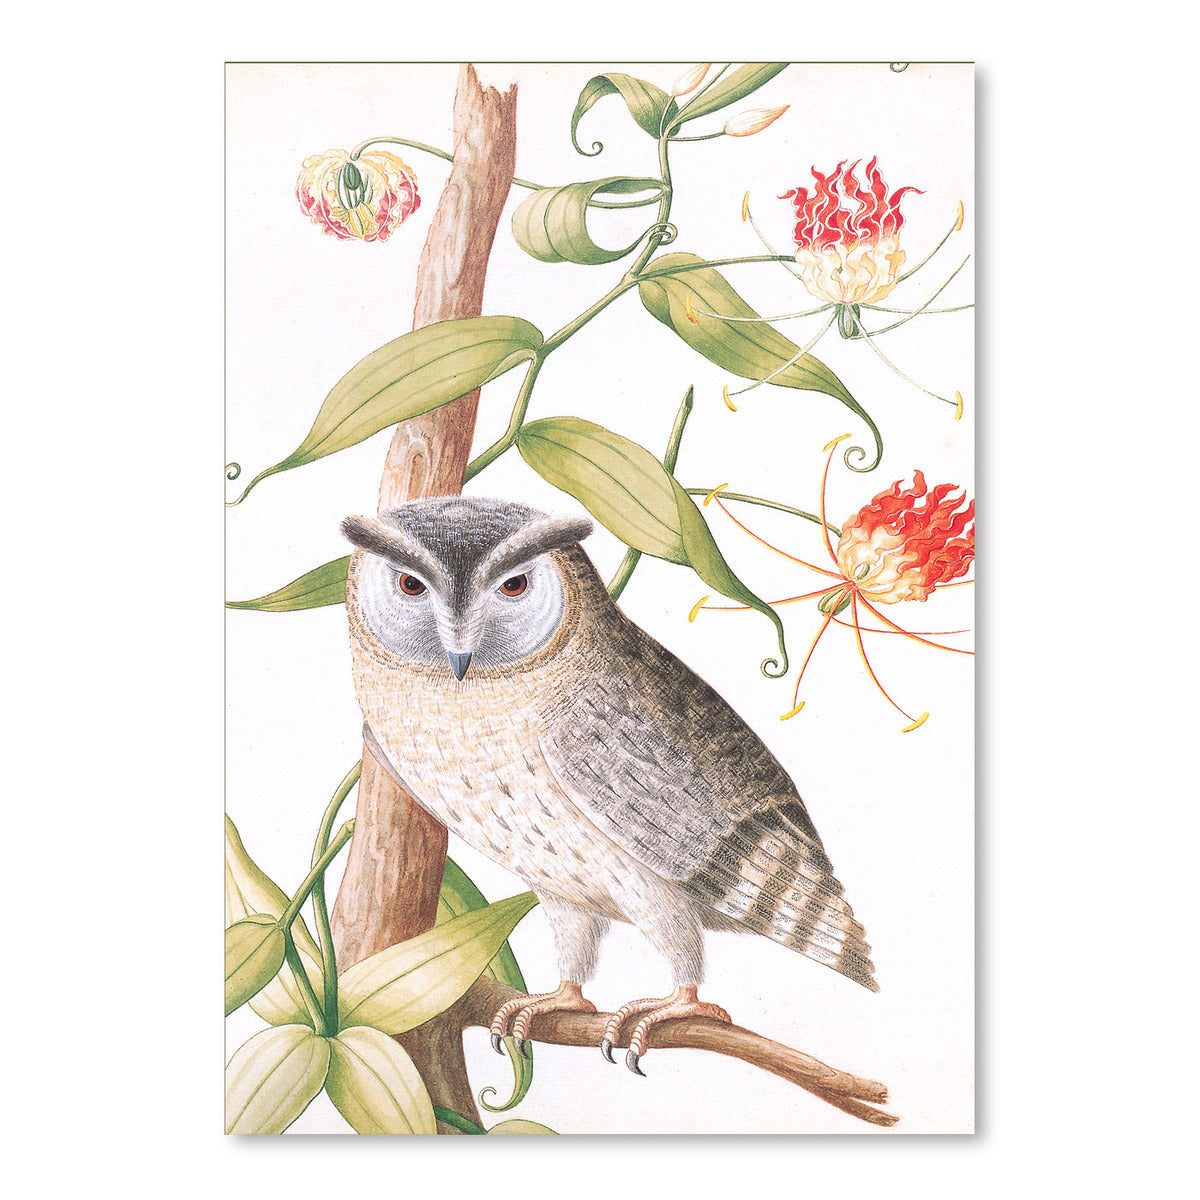 Pensive Owl by Found Image Press Art Print - Art Print - Americanflat